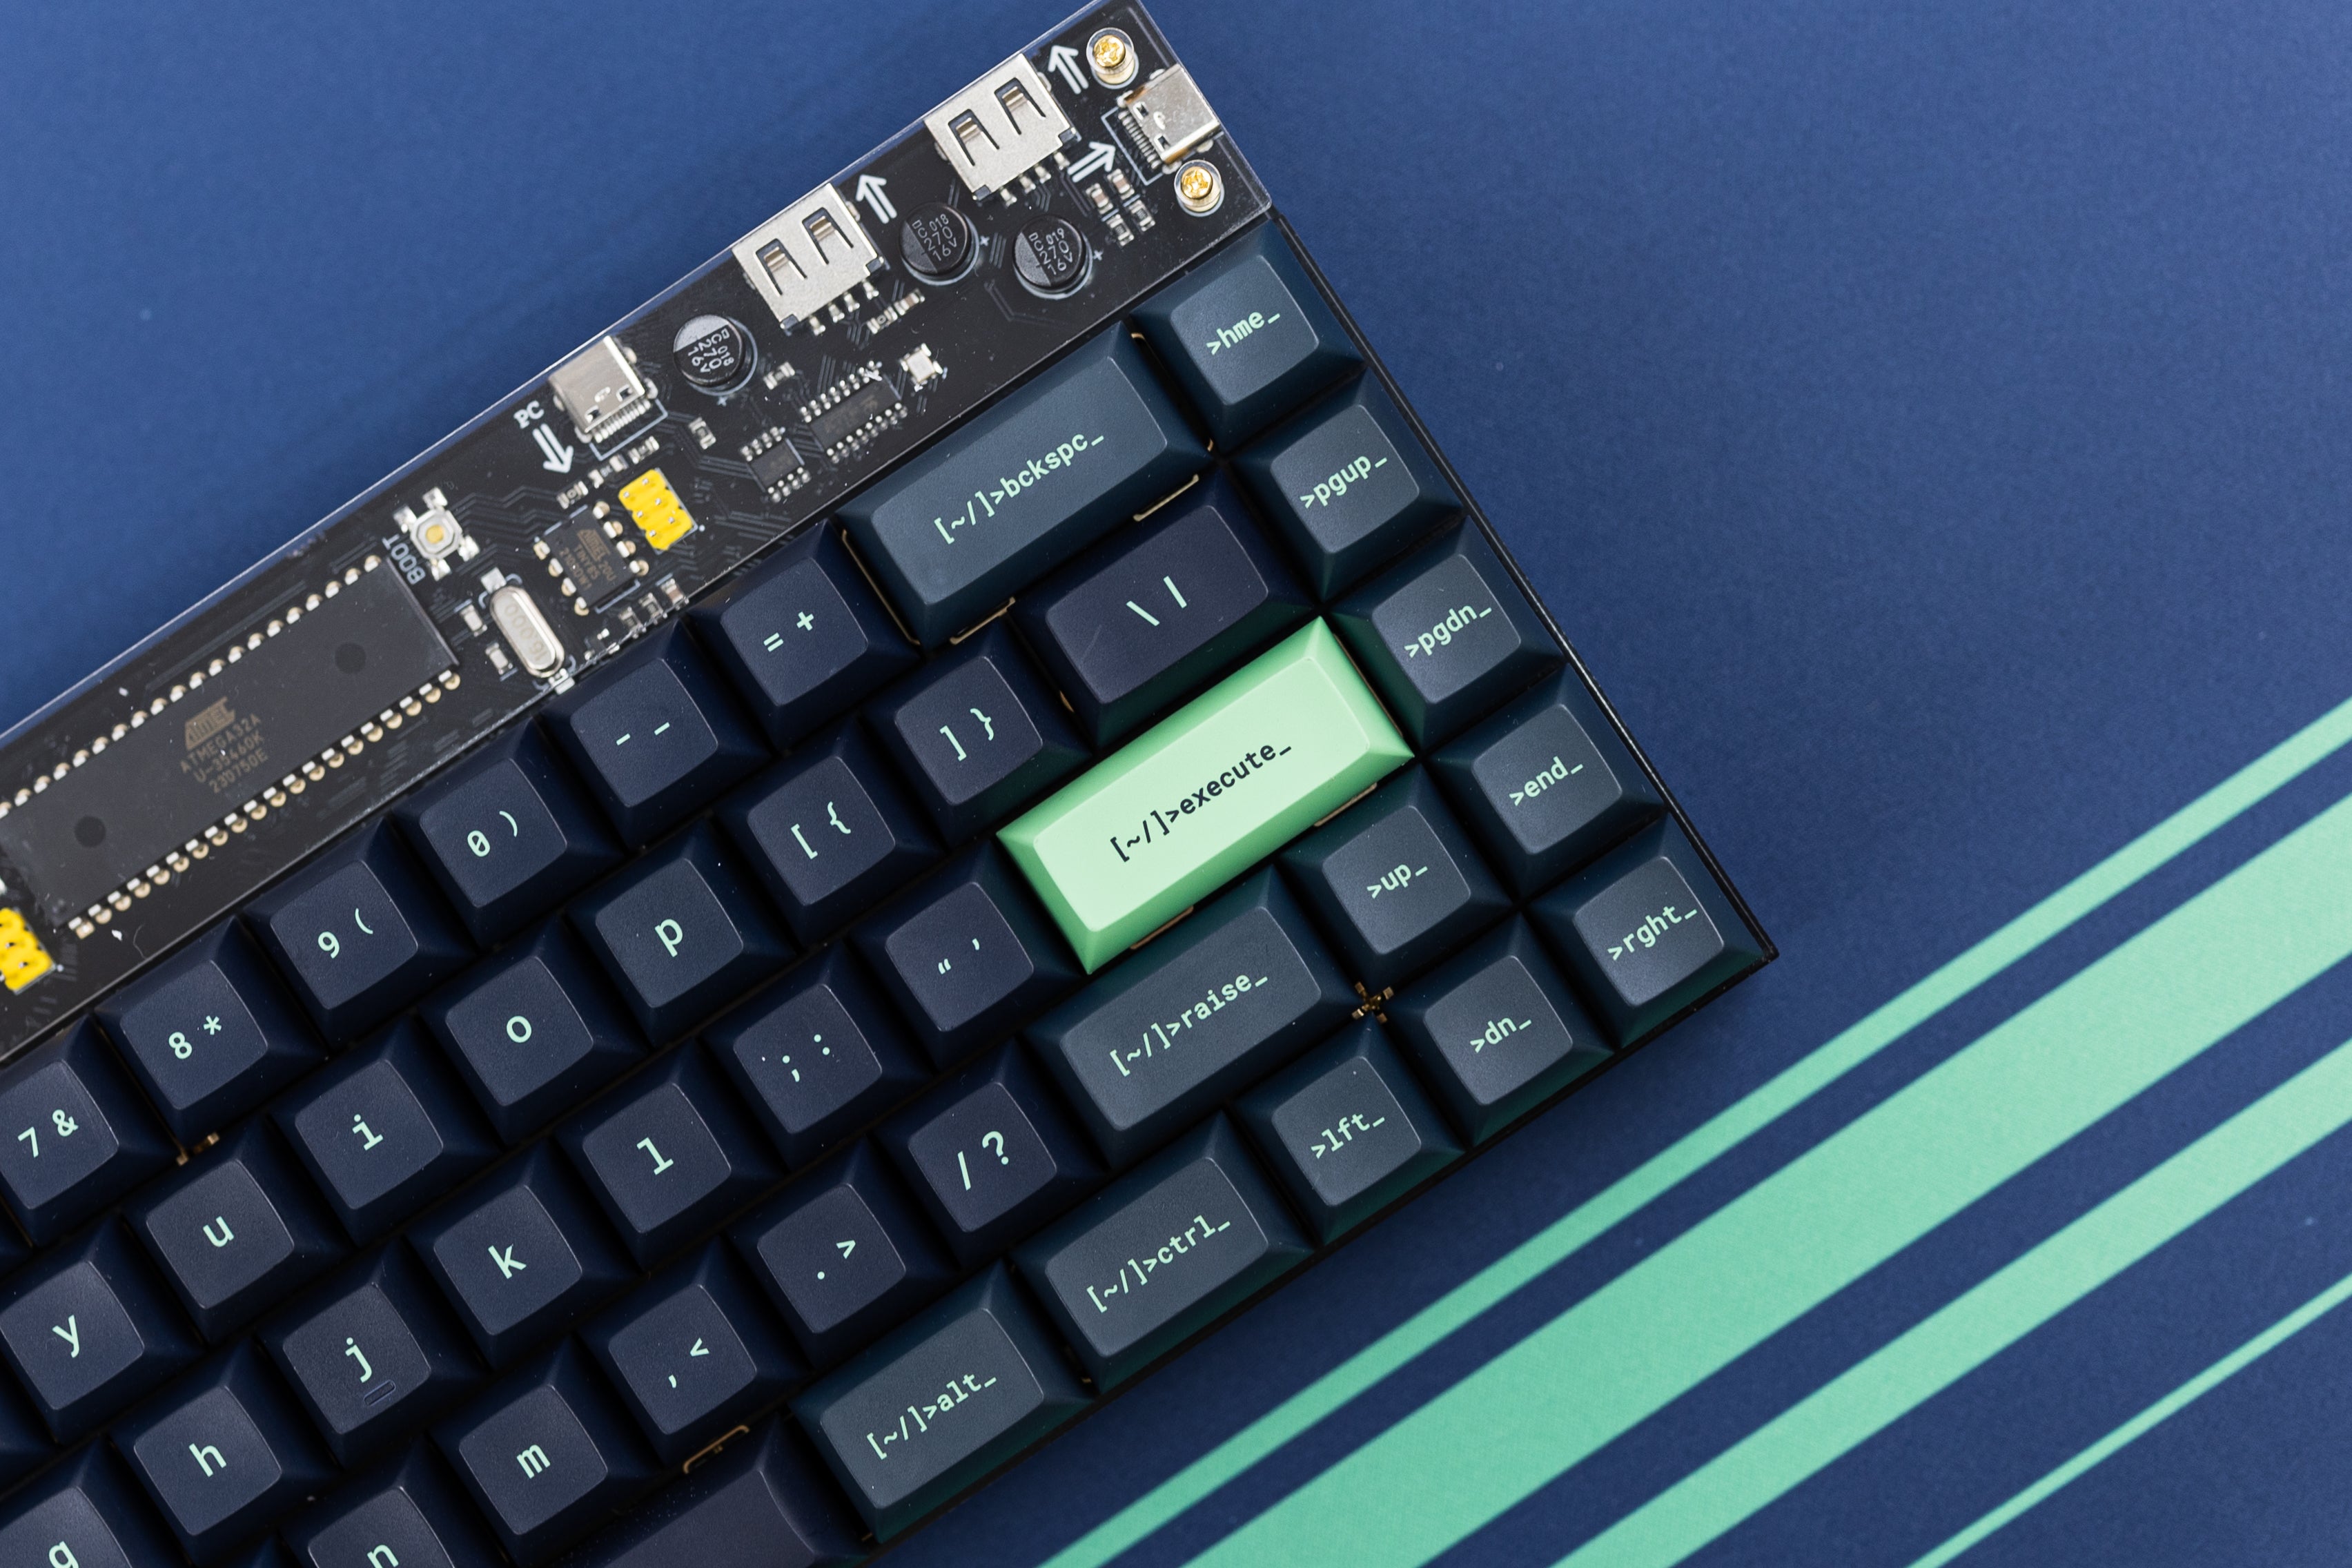 [In Stock] Lelelab Y2K 76 x KAM Superuser PreBuilt Ready-to-use Keyboard